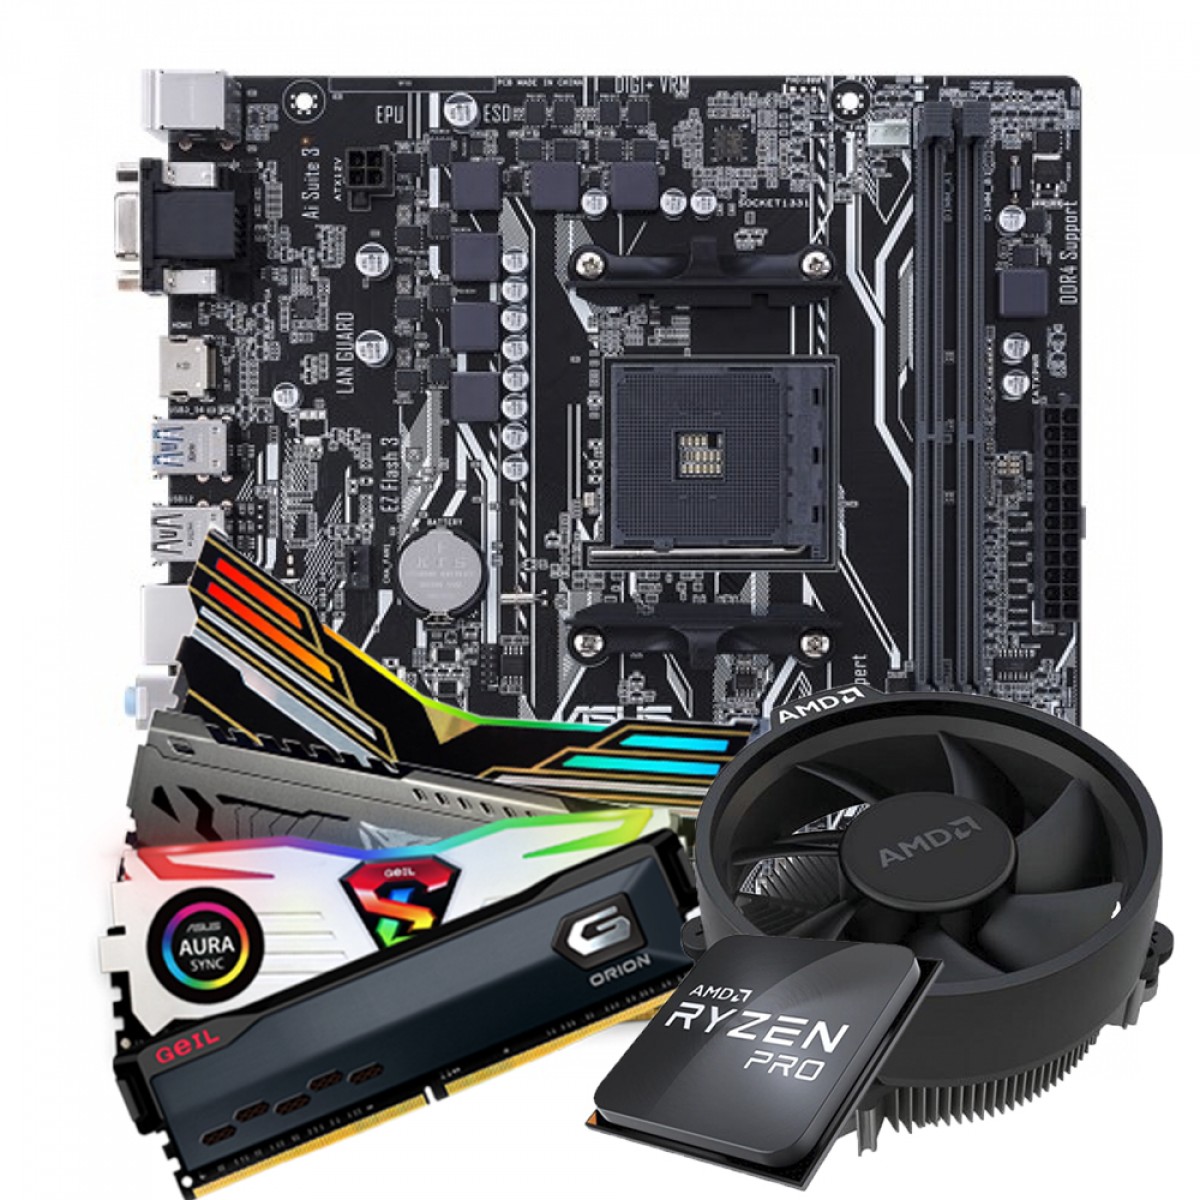 Kit Upgrade AMD Ryzen 5 PRO 2400GE + Asus Prime A320M-K + Memória DDR4 8GB 2666MHz